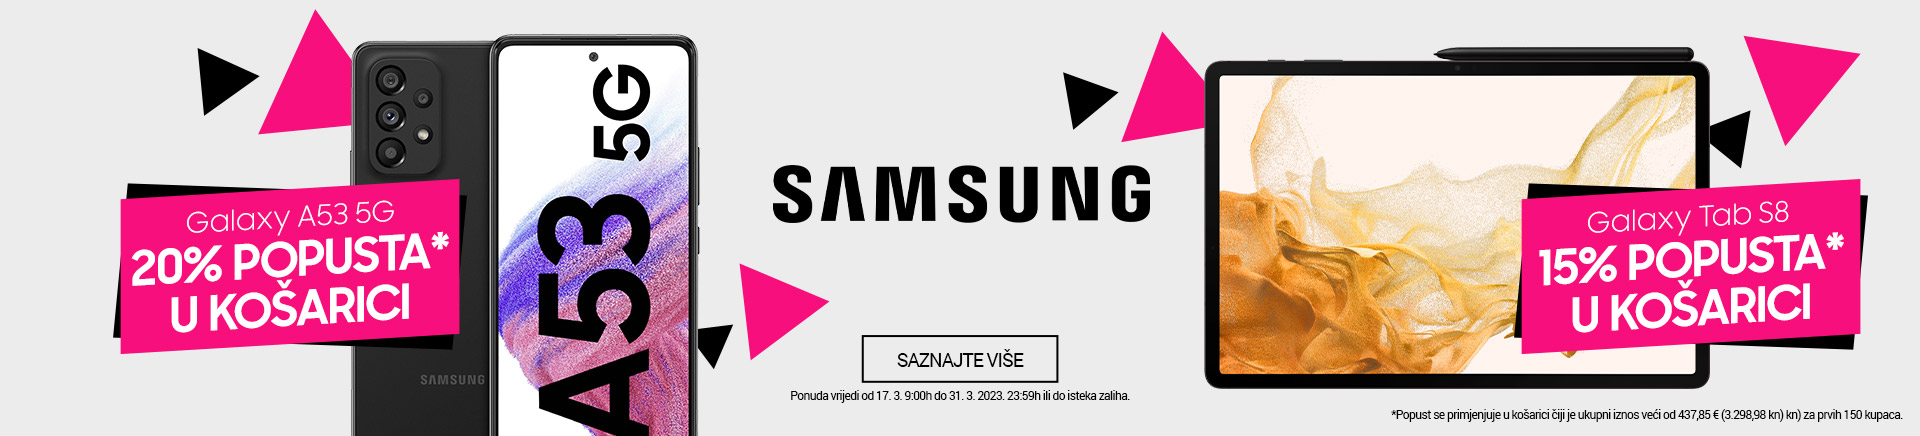 HR Samsung Galaxy A53 5G Tab S8 U Kosarici WIDESCREEN 1920 X 436.jpg